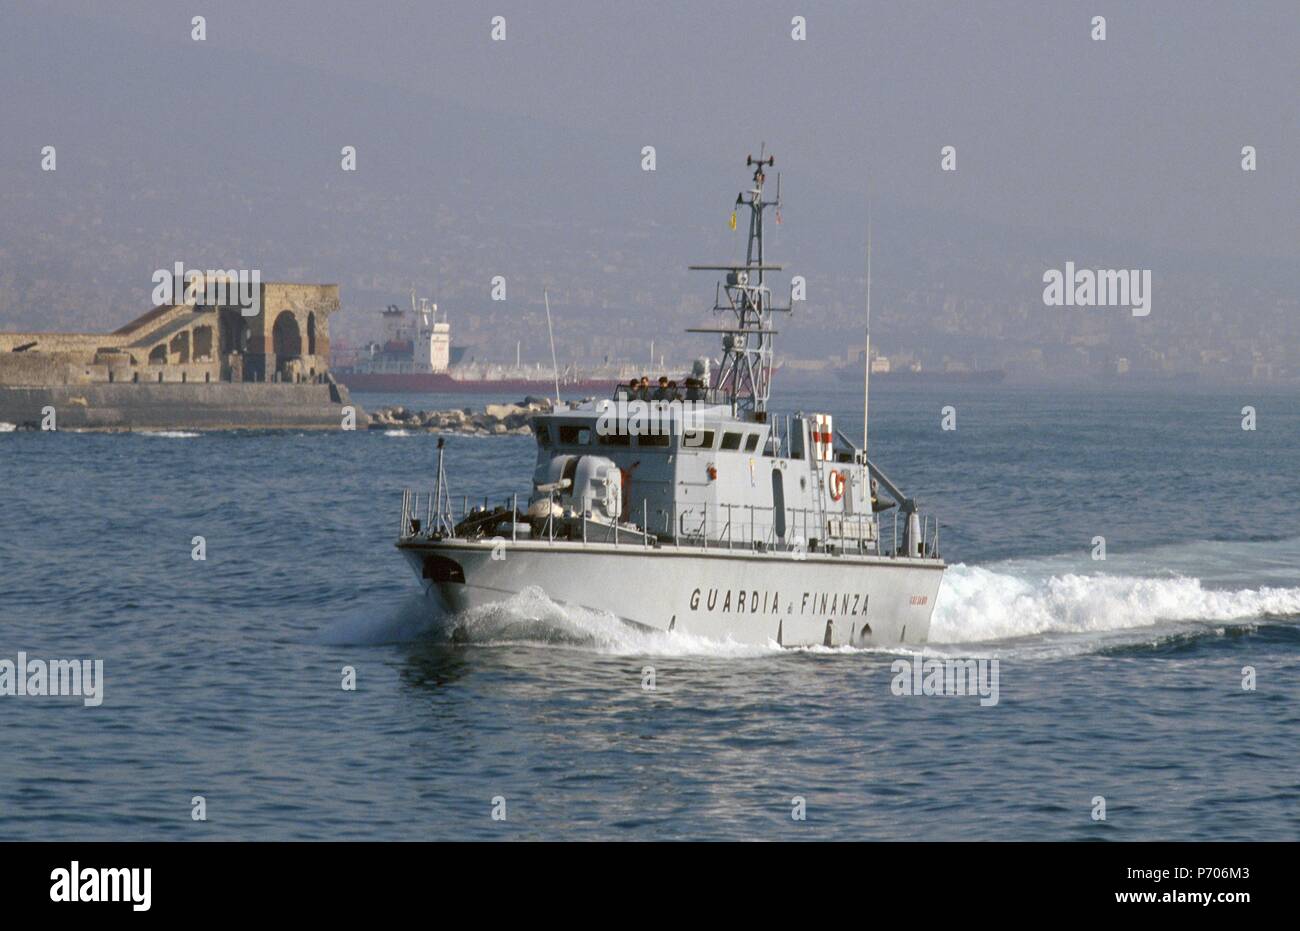 Italian finance police, 'Bigliani' class patrol boat navigating in the Gulf of Naples Stock Photo